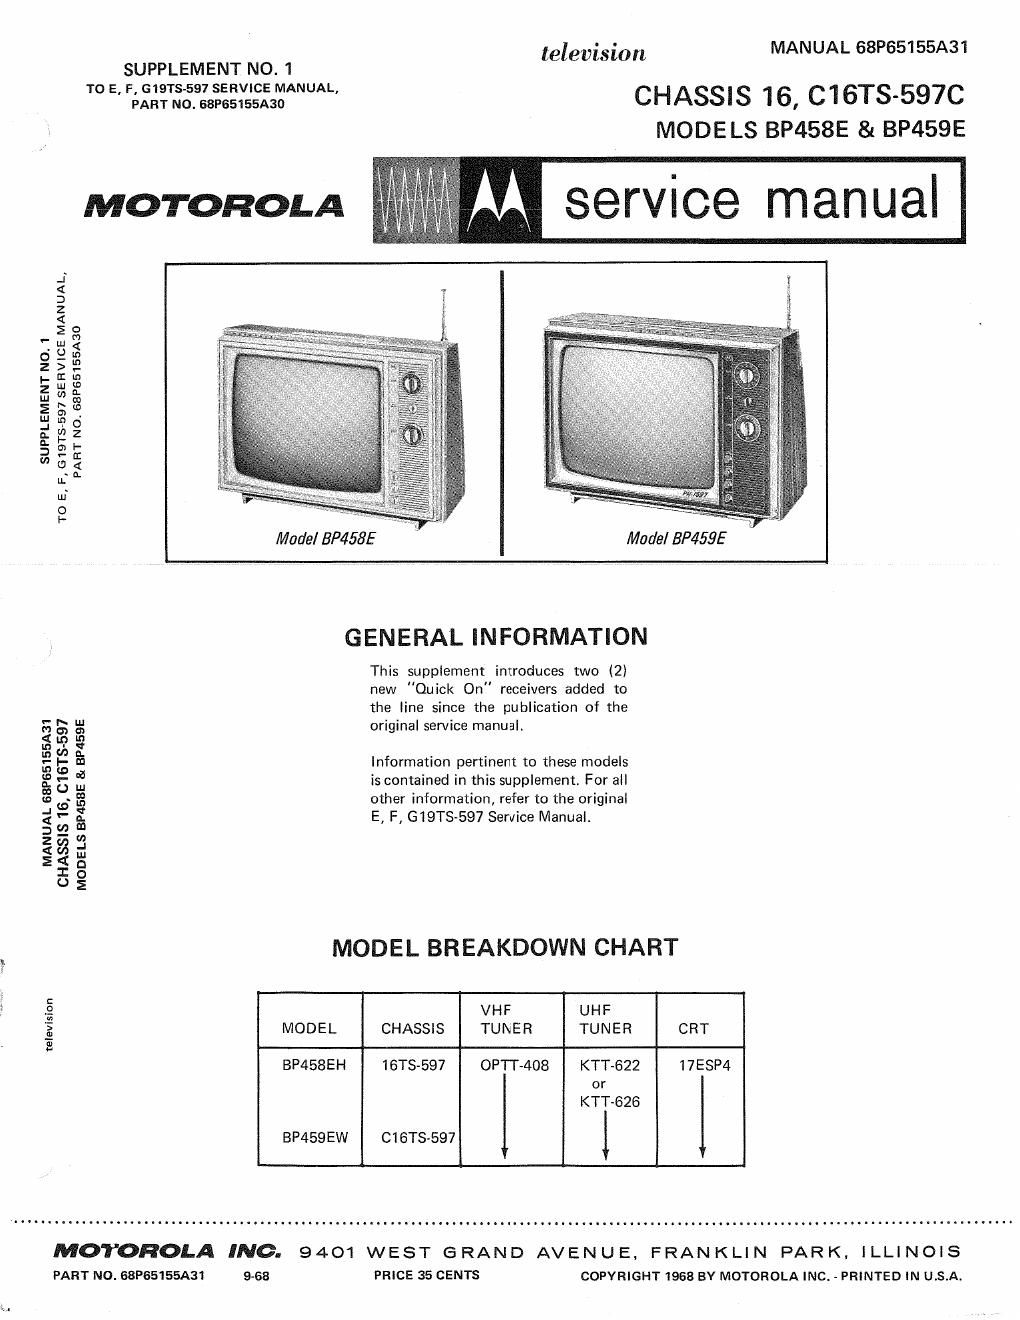 motorola bp 458 e service manual